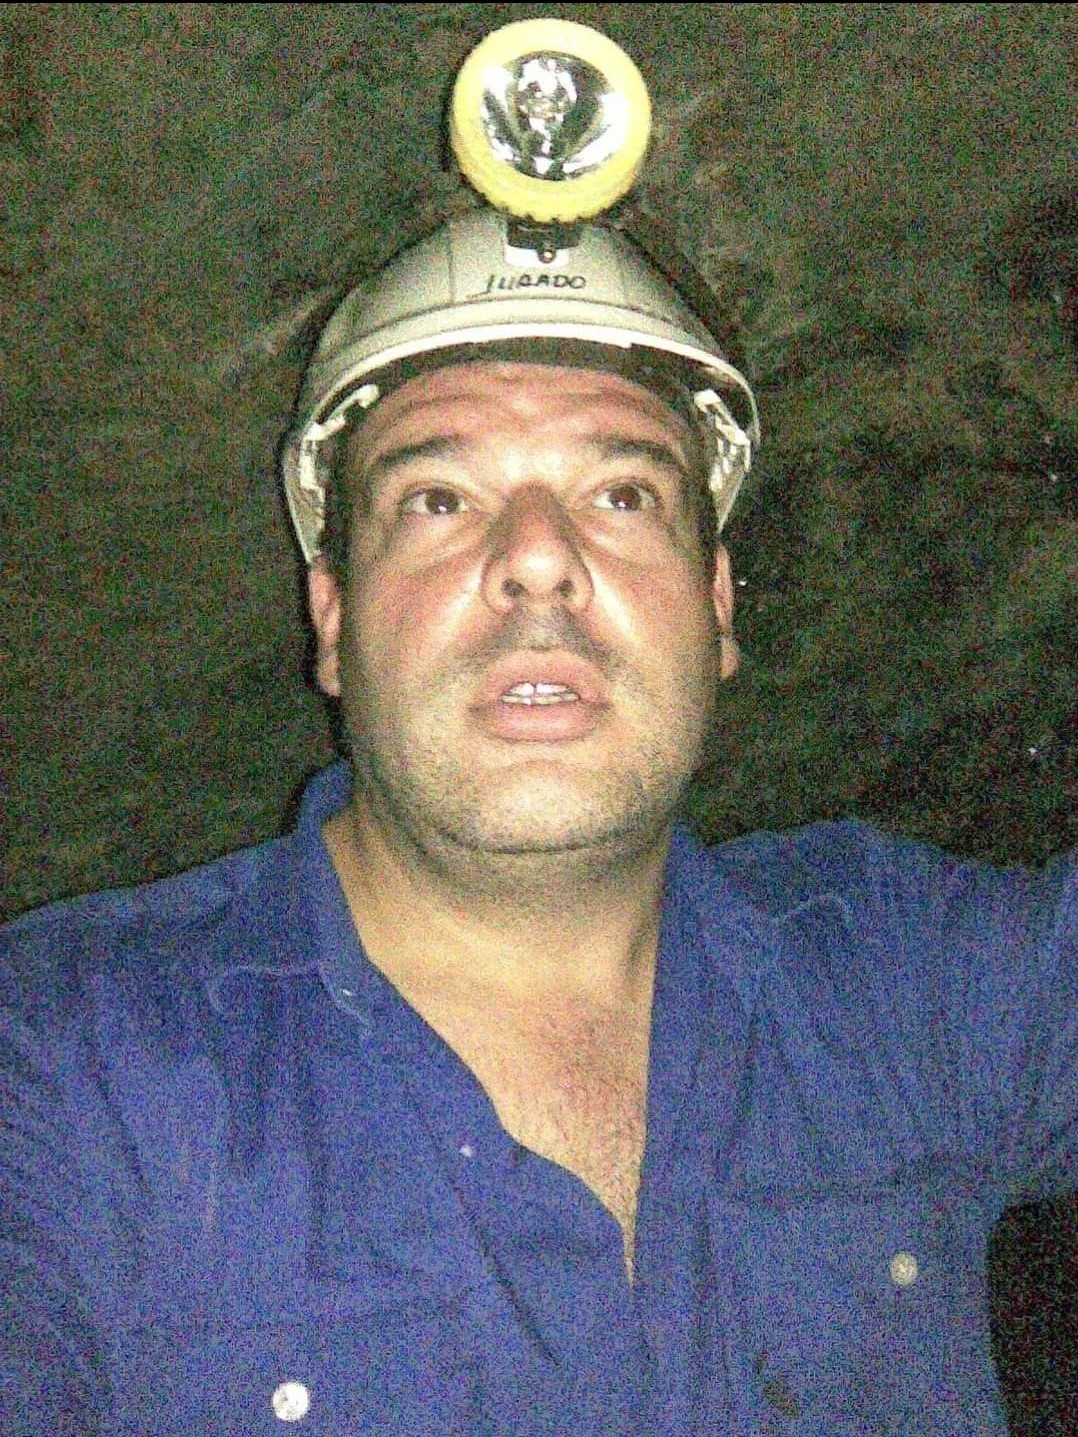 Foto nº 2. Juan Miguel Jurado, minero de Almadén